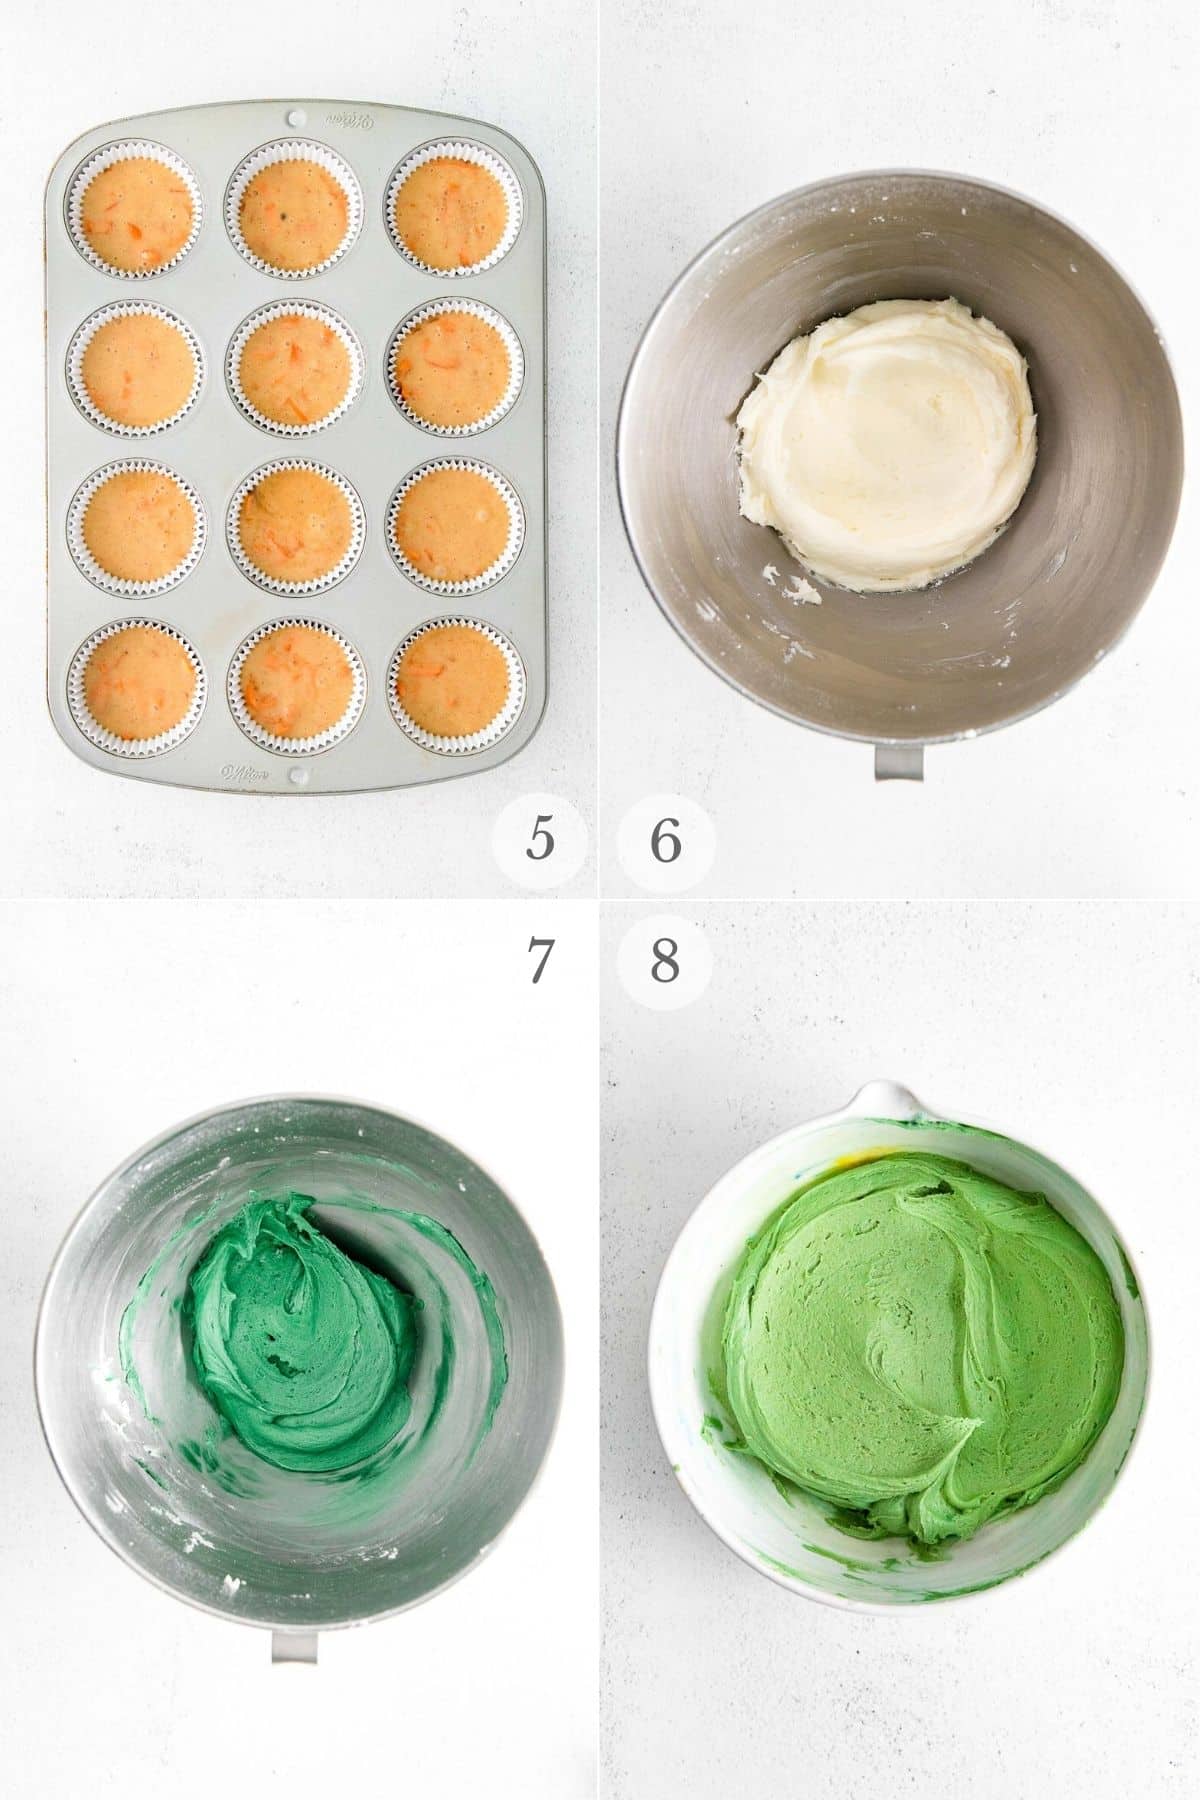 carrot cake cupcakes recipe steps 5-8